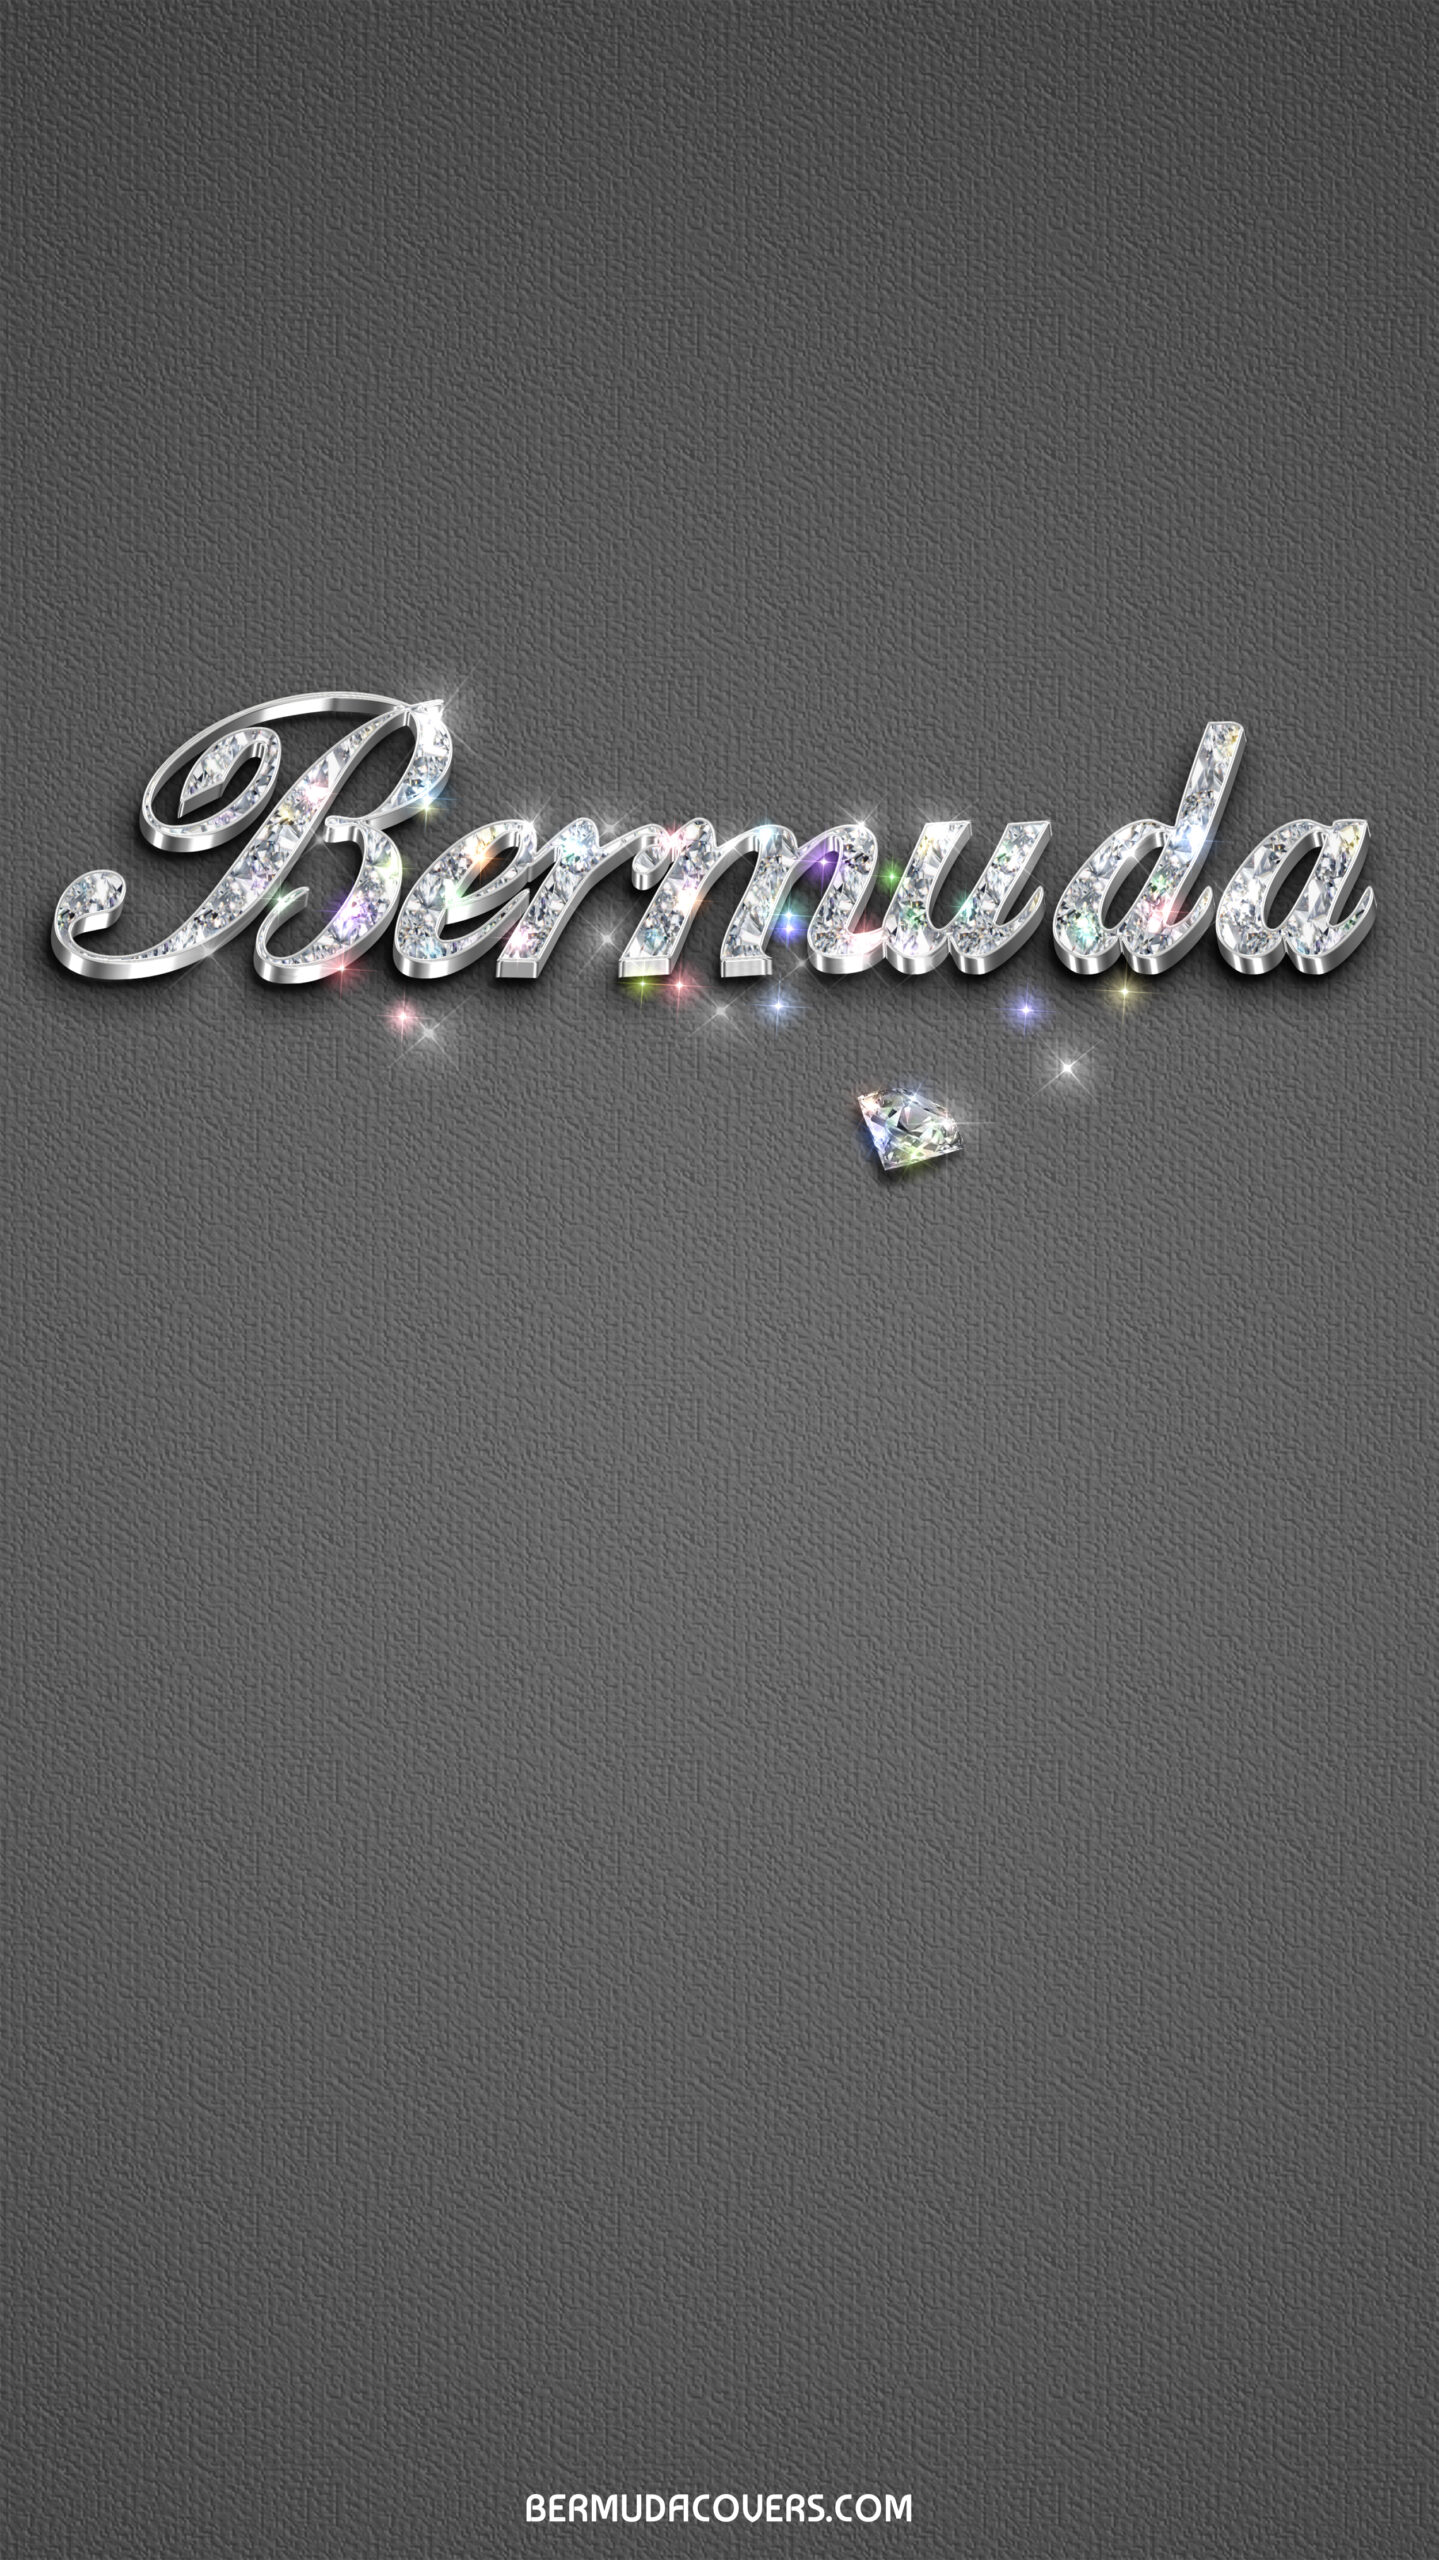 Luxuy-3d-silver-diamond-Bermuda-Phone-Wallpaper-n8T7rrZV-scaled